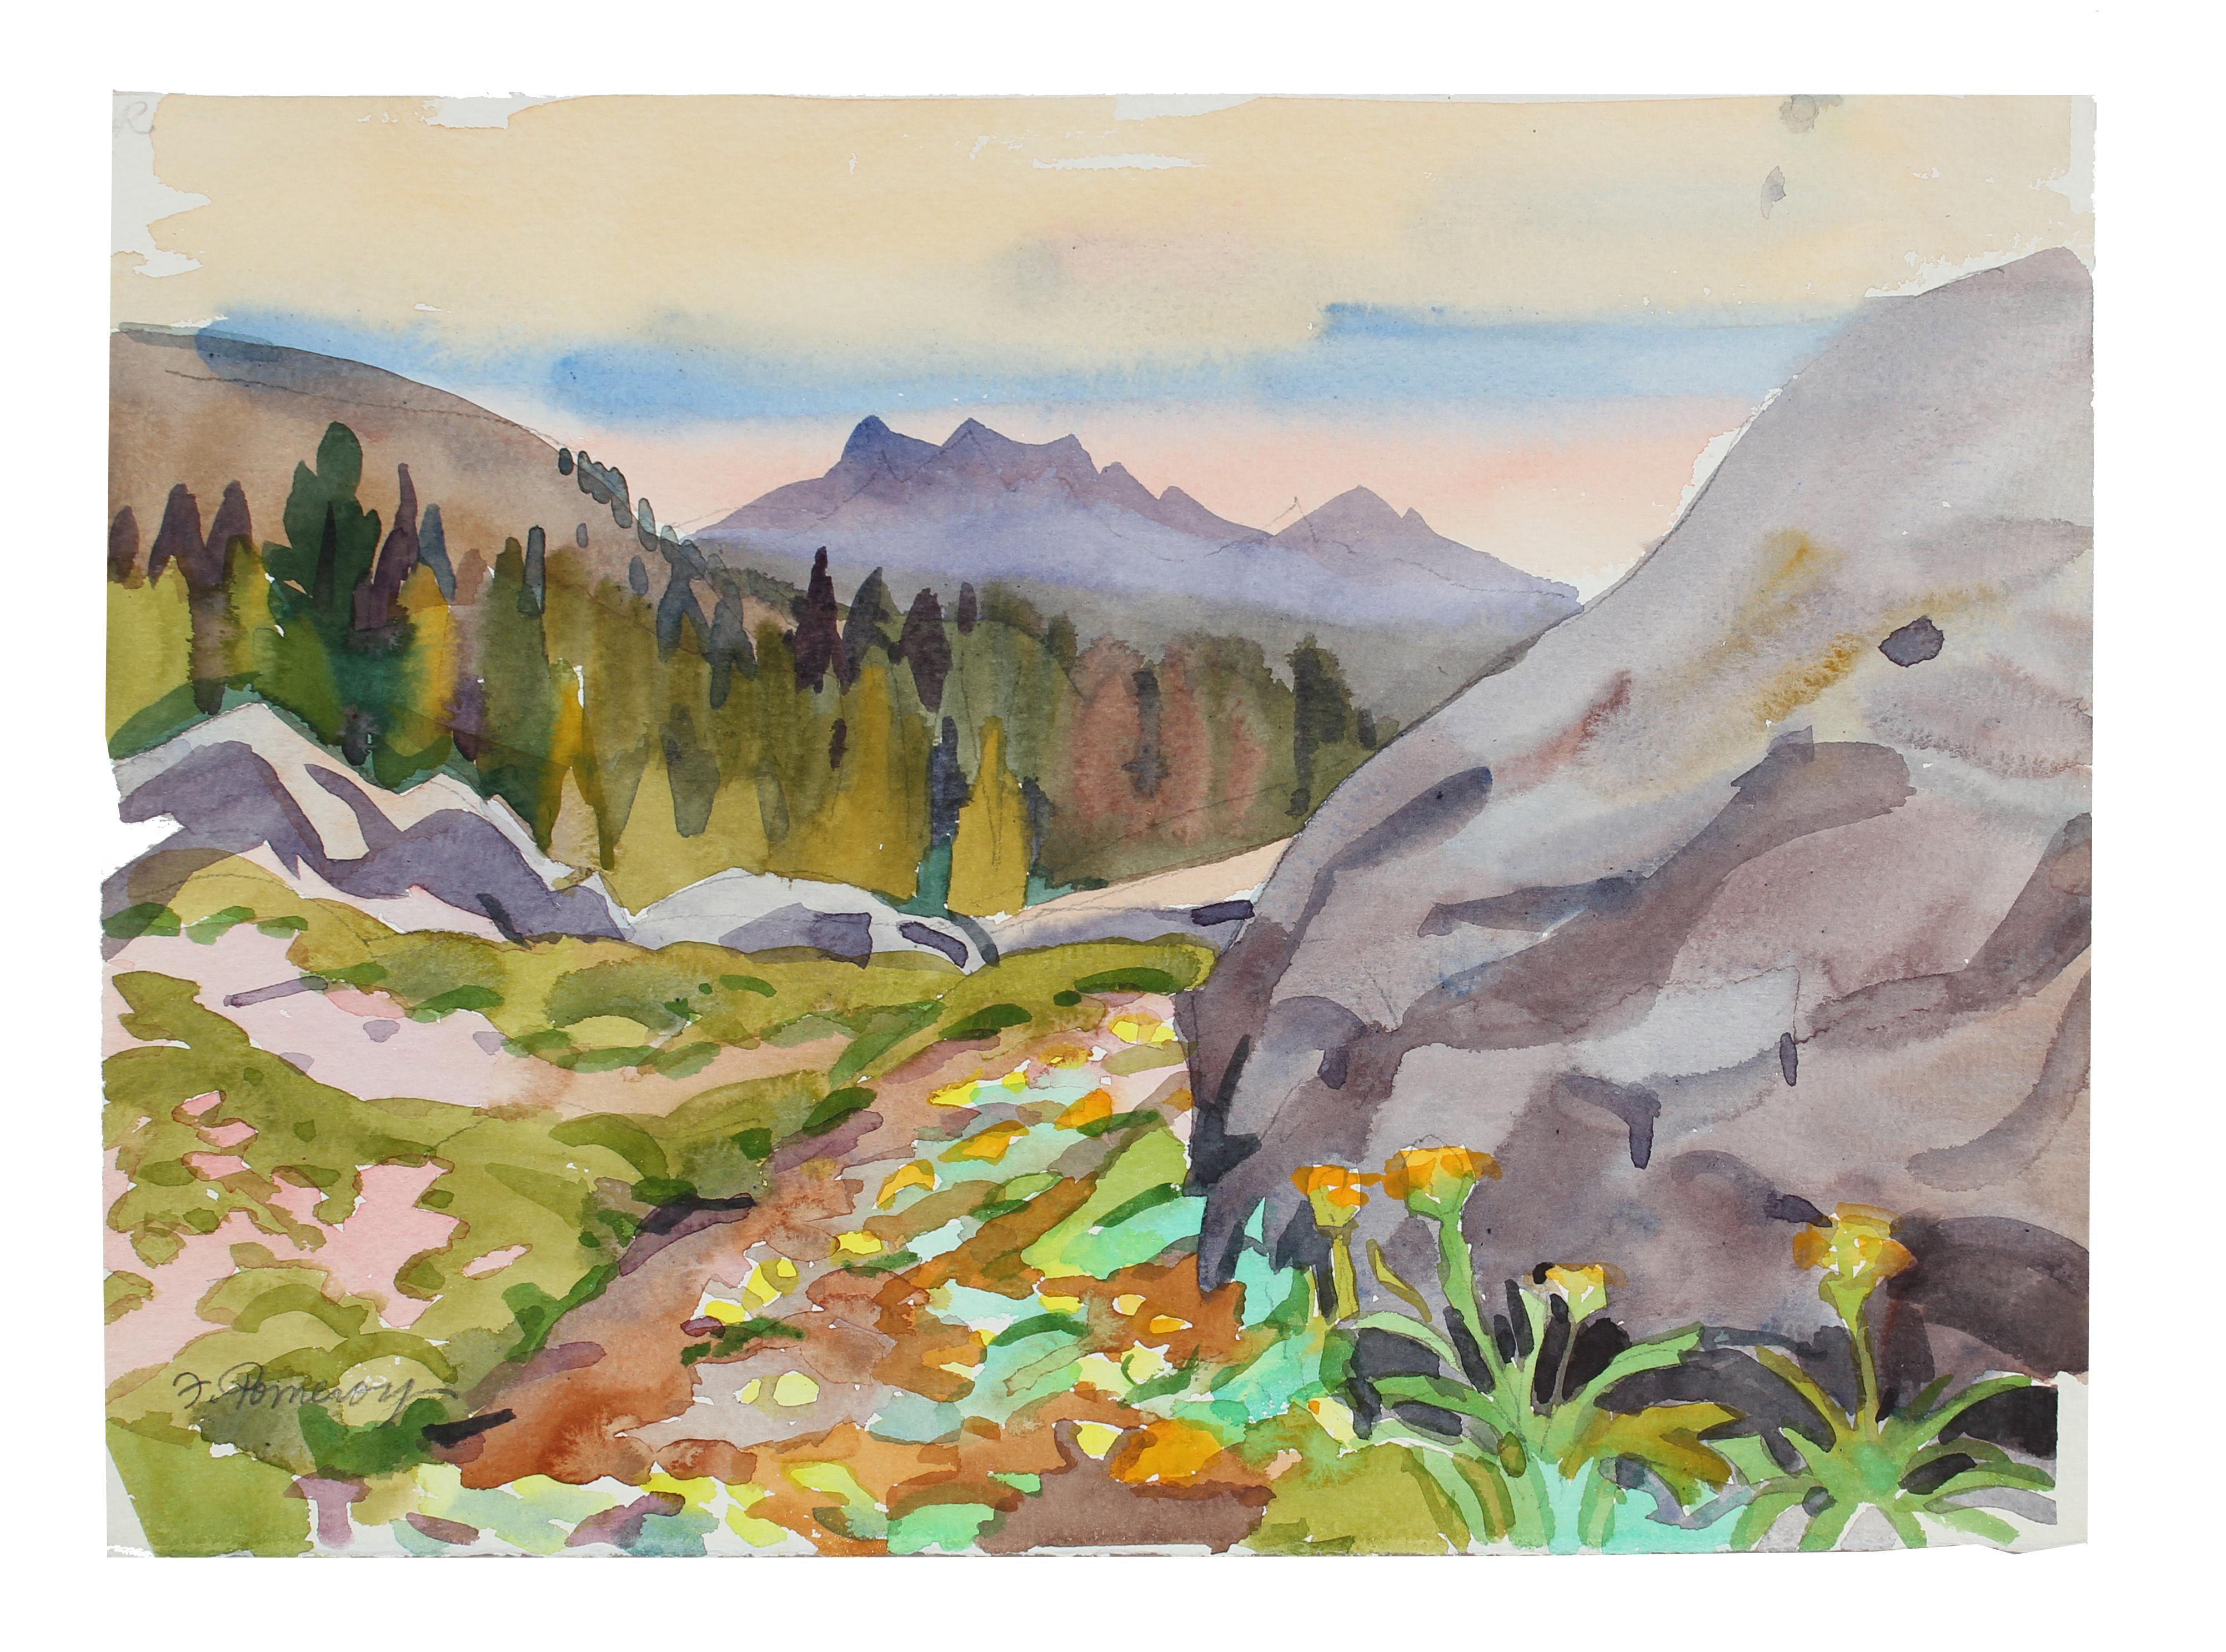 Frederick Pomeroy Landscape Art - "Above Lake Alpine: Ebbets Pass" Watercolor Landscape Painting